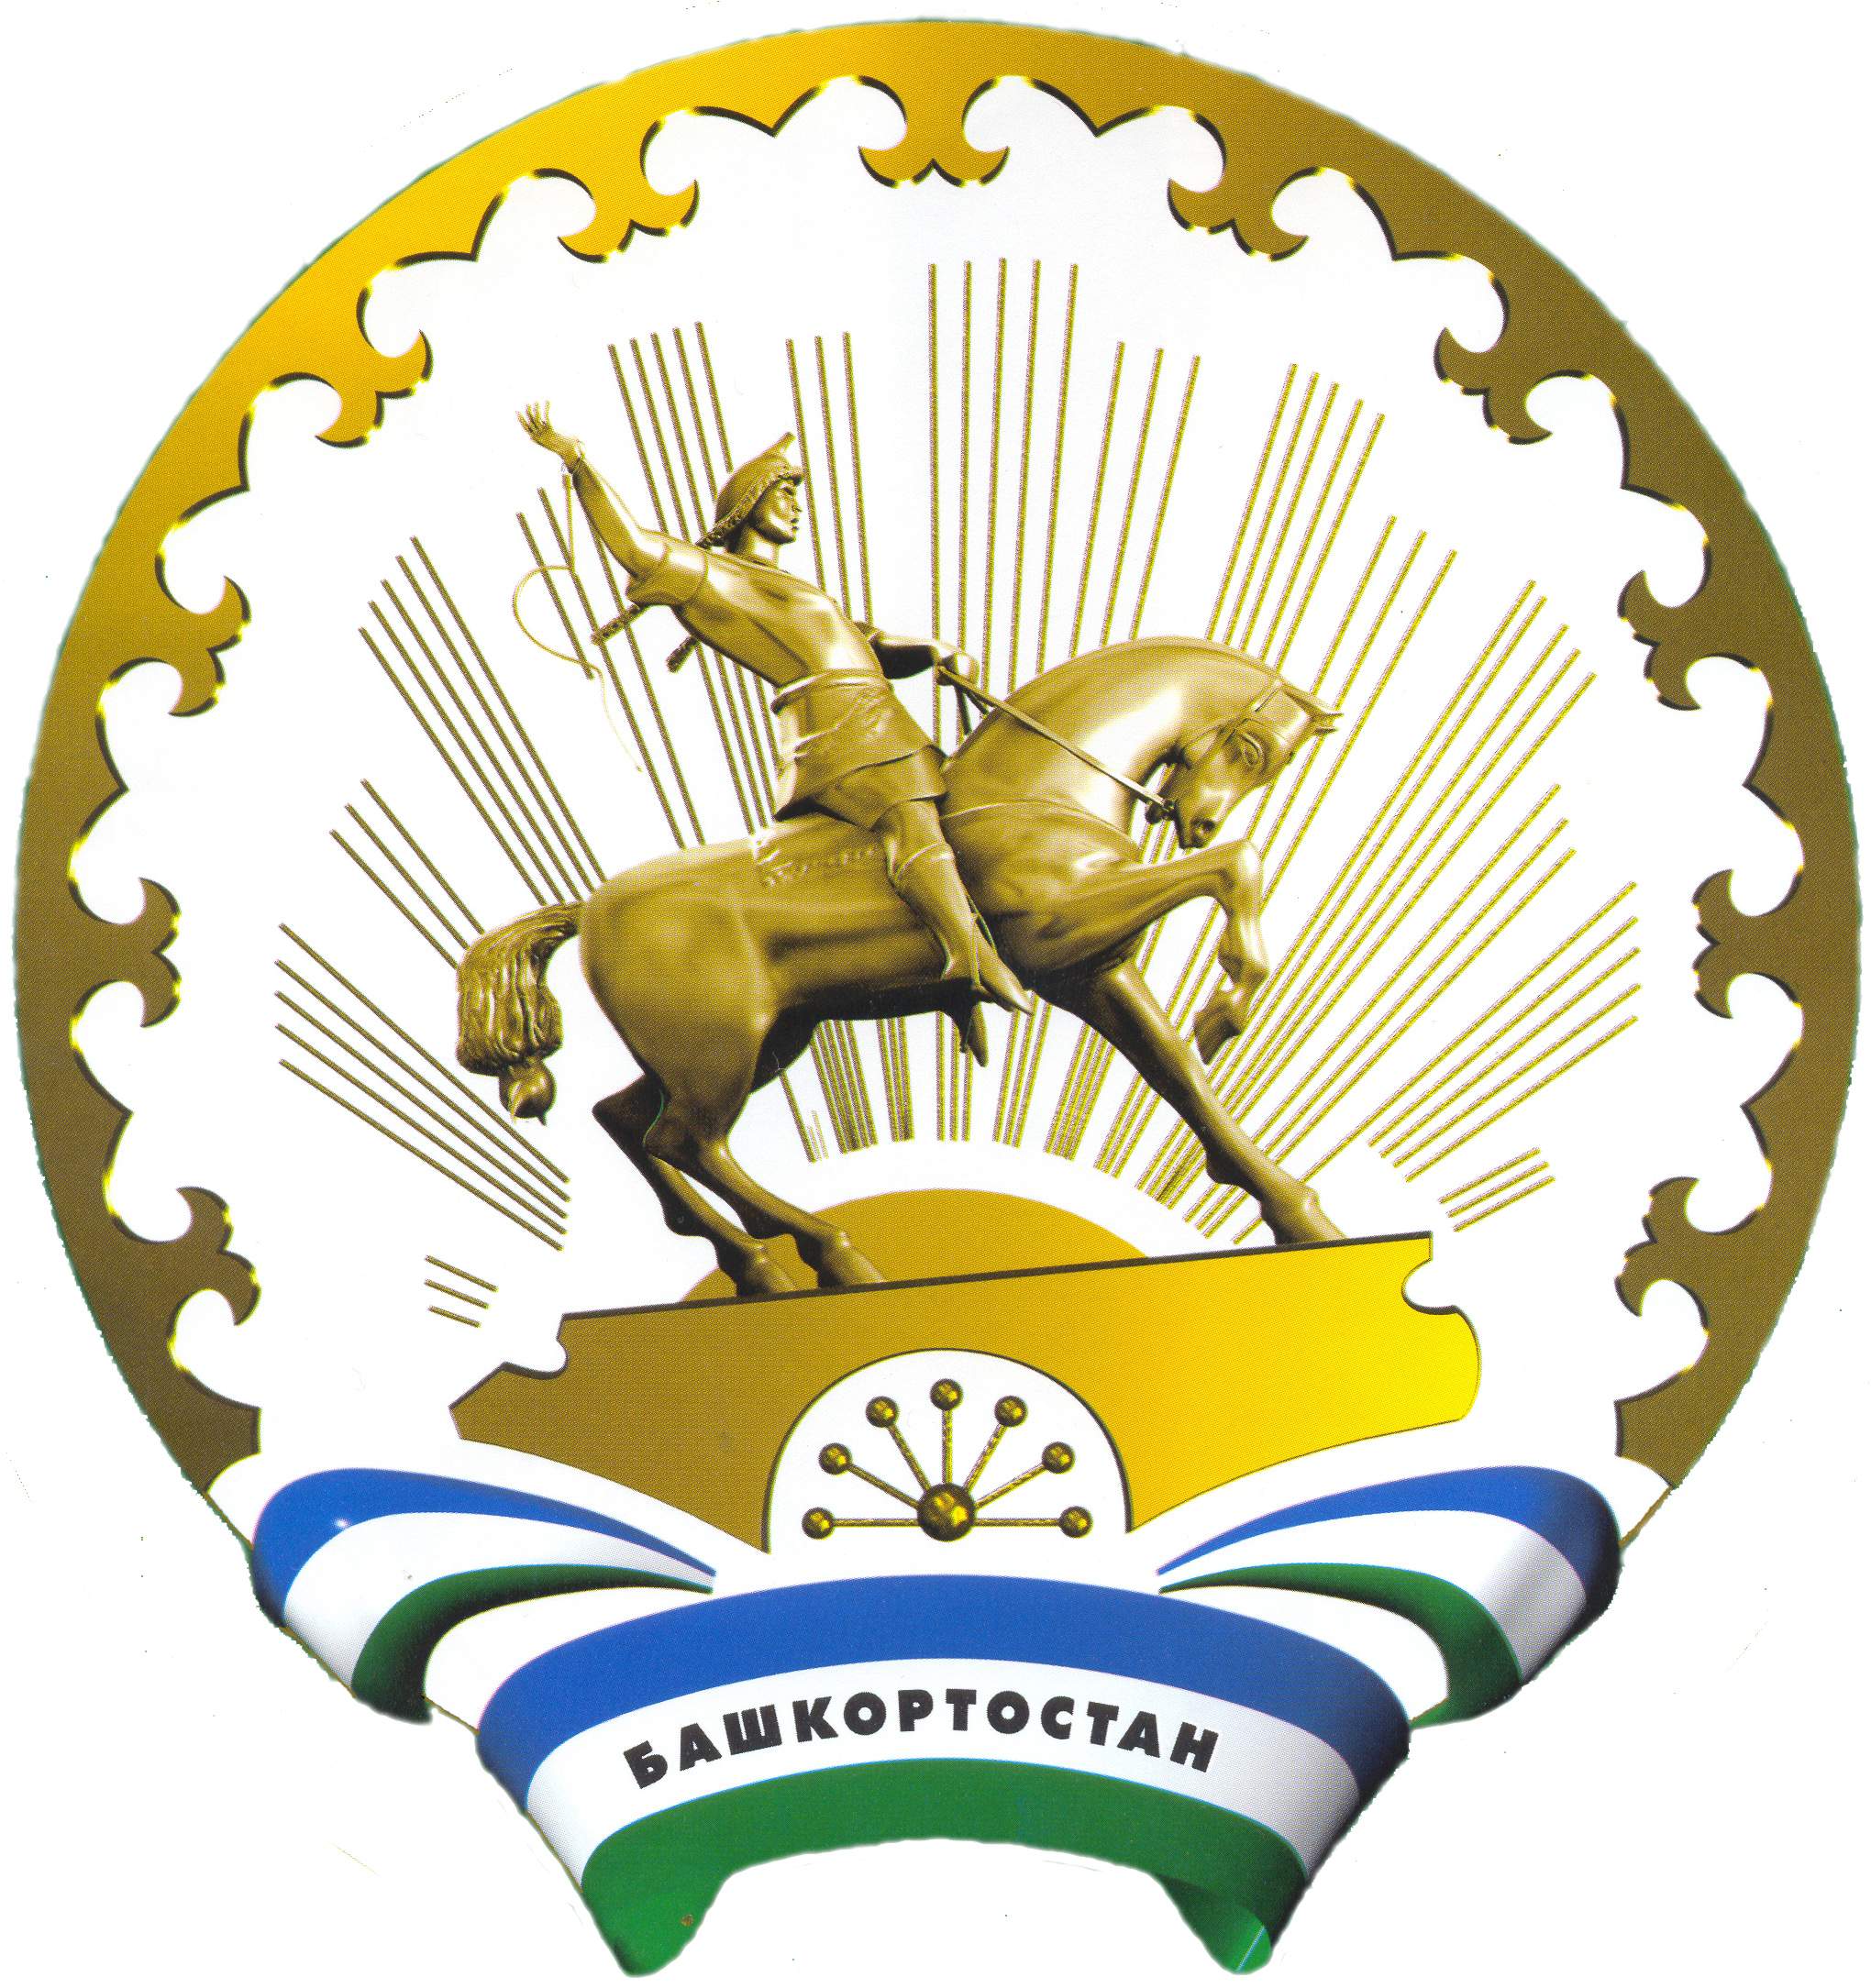 Производственный календарь Башкортостана 2018 года